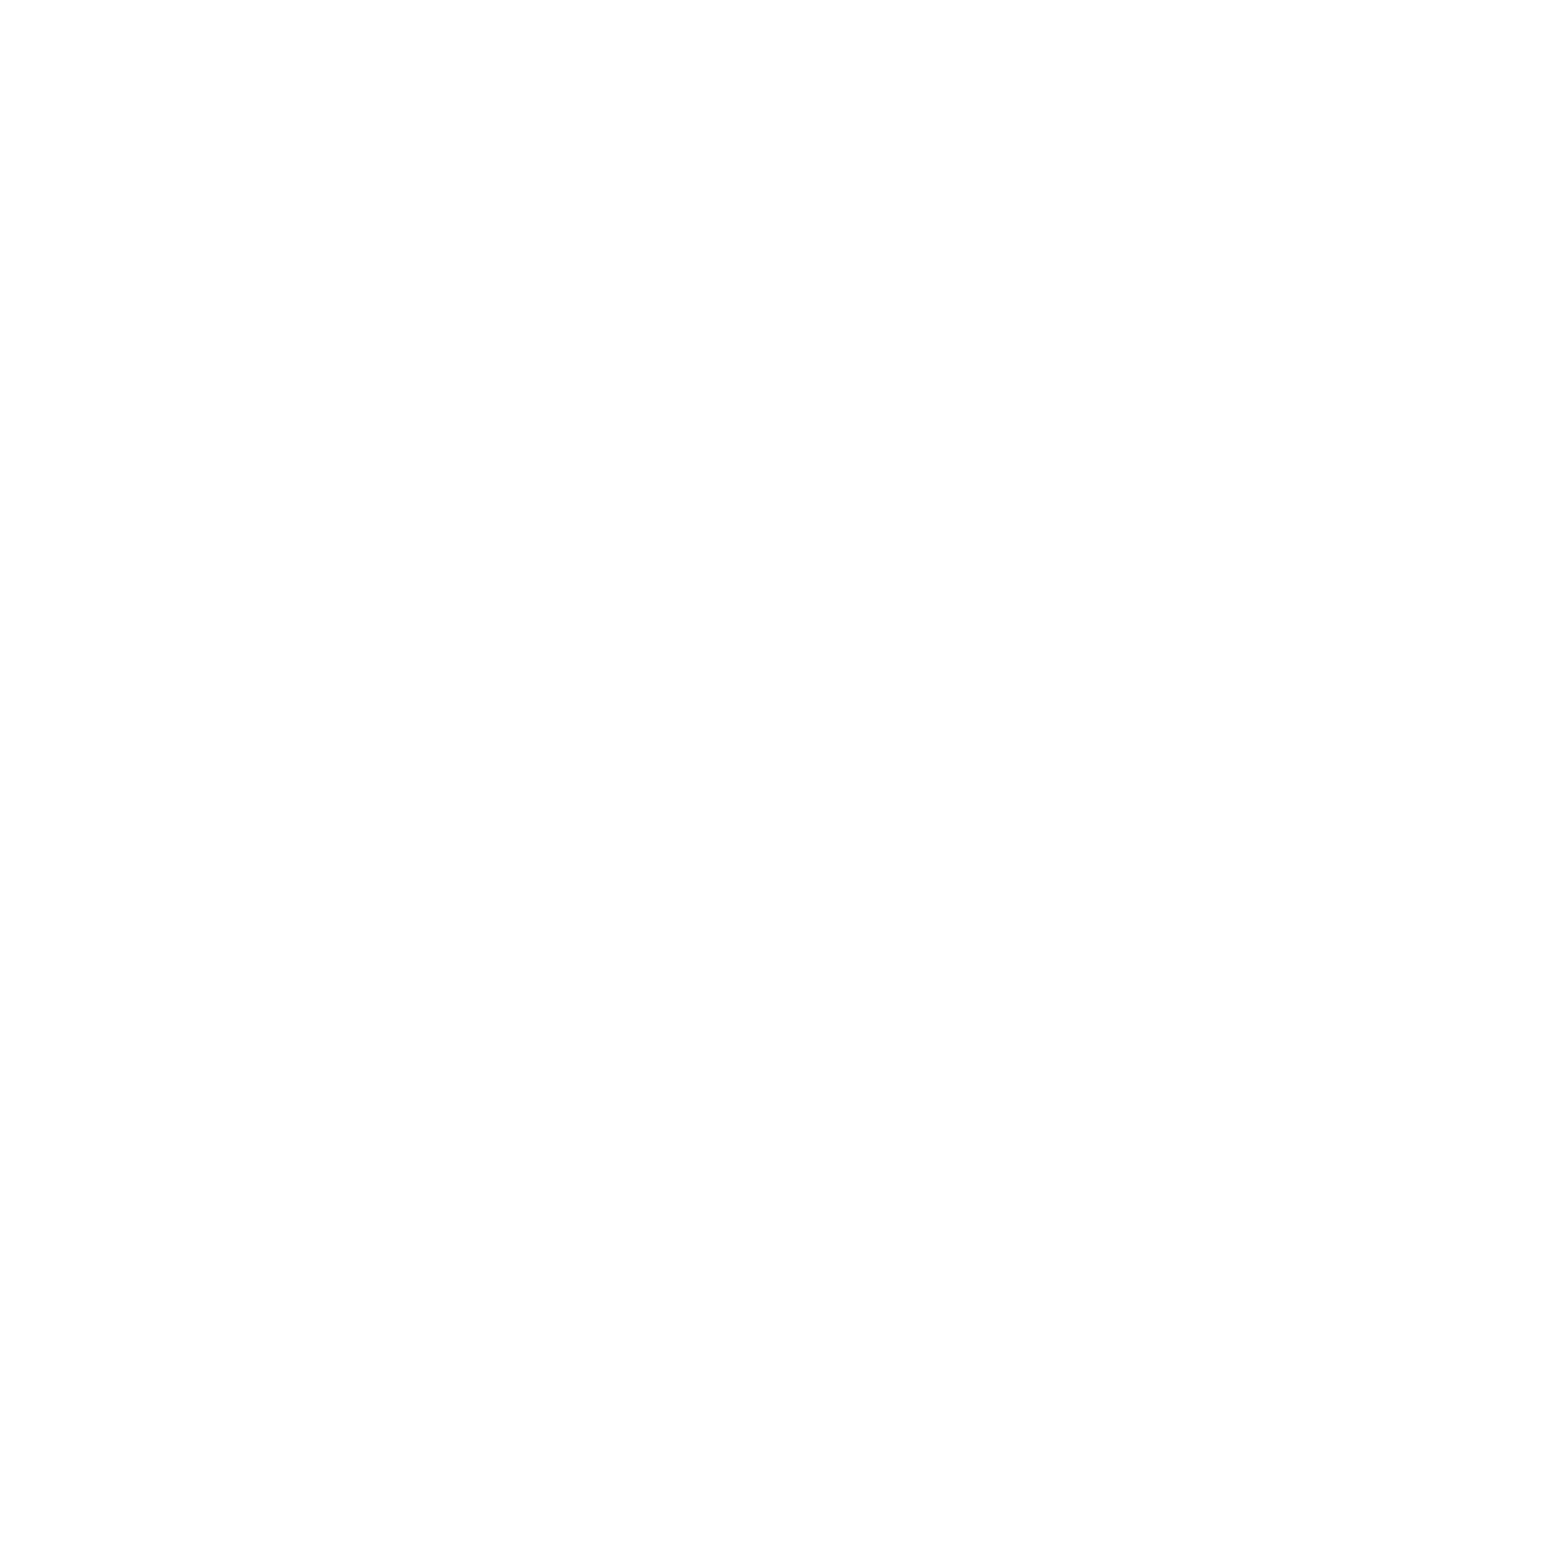 M&G plc logo for dark backgrounds (transparent PNG)